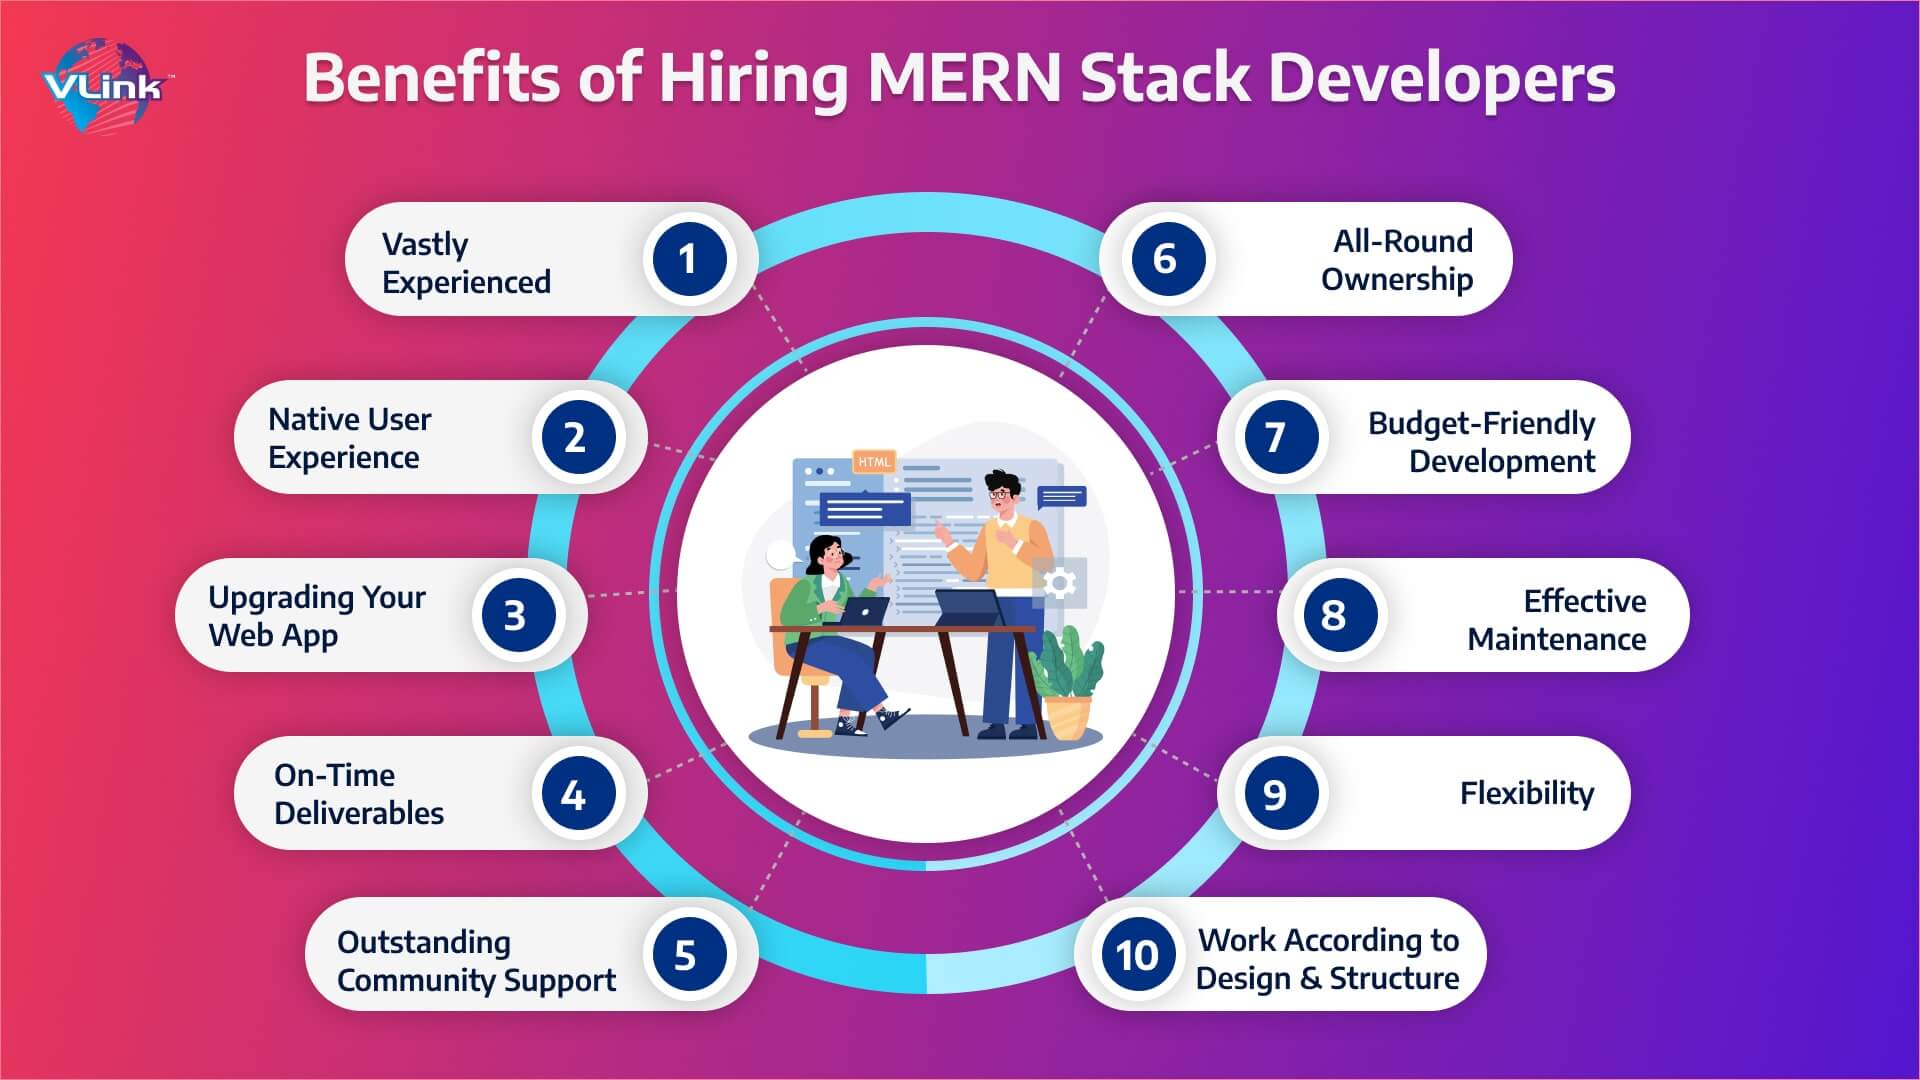 Benefits of Hiring MERN Stack Developers